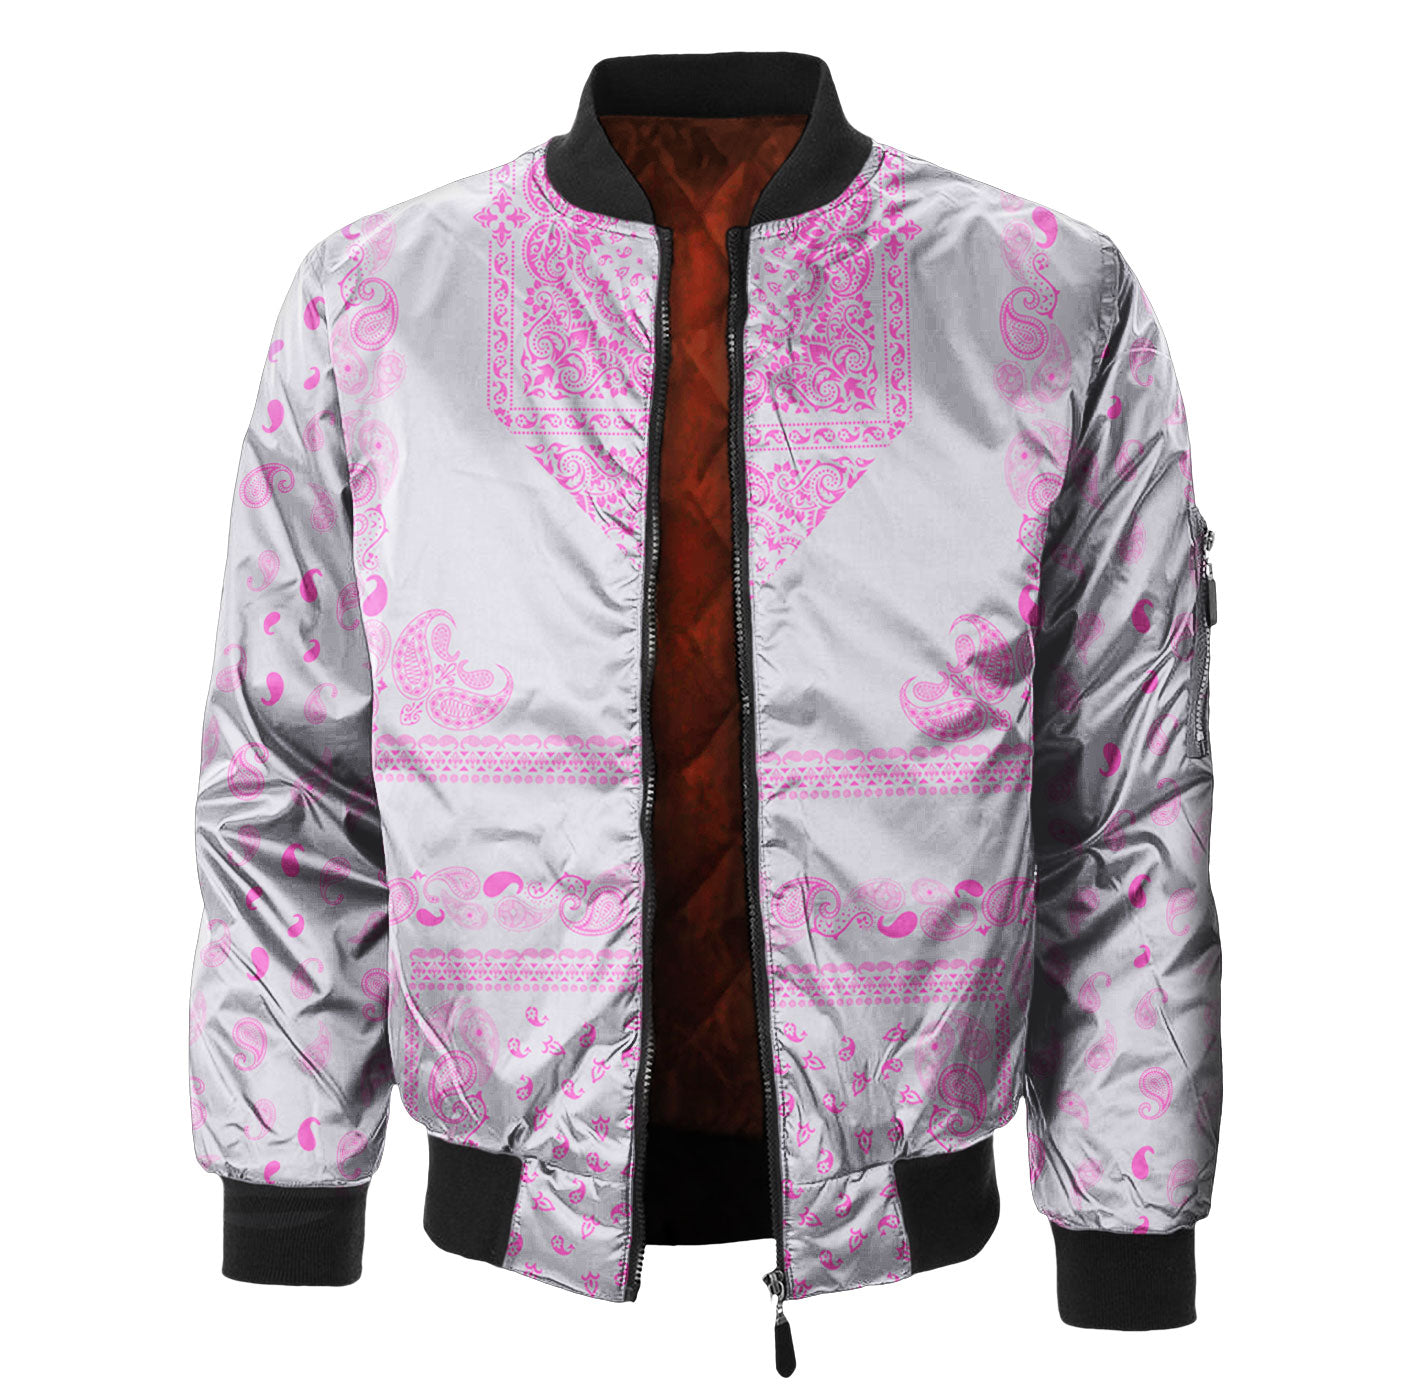 Think Pink Bomber Jacket